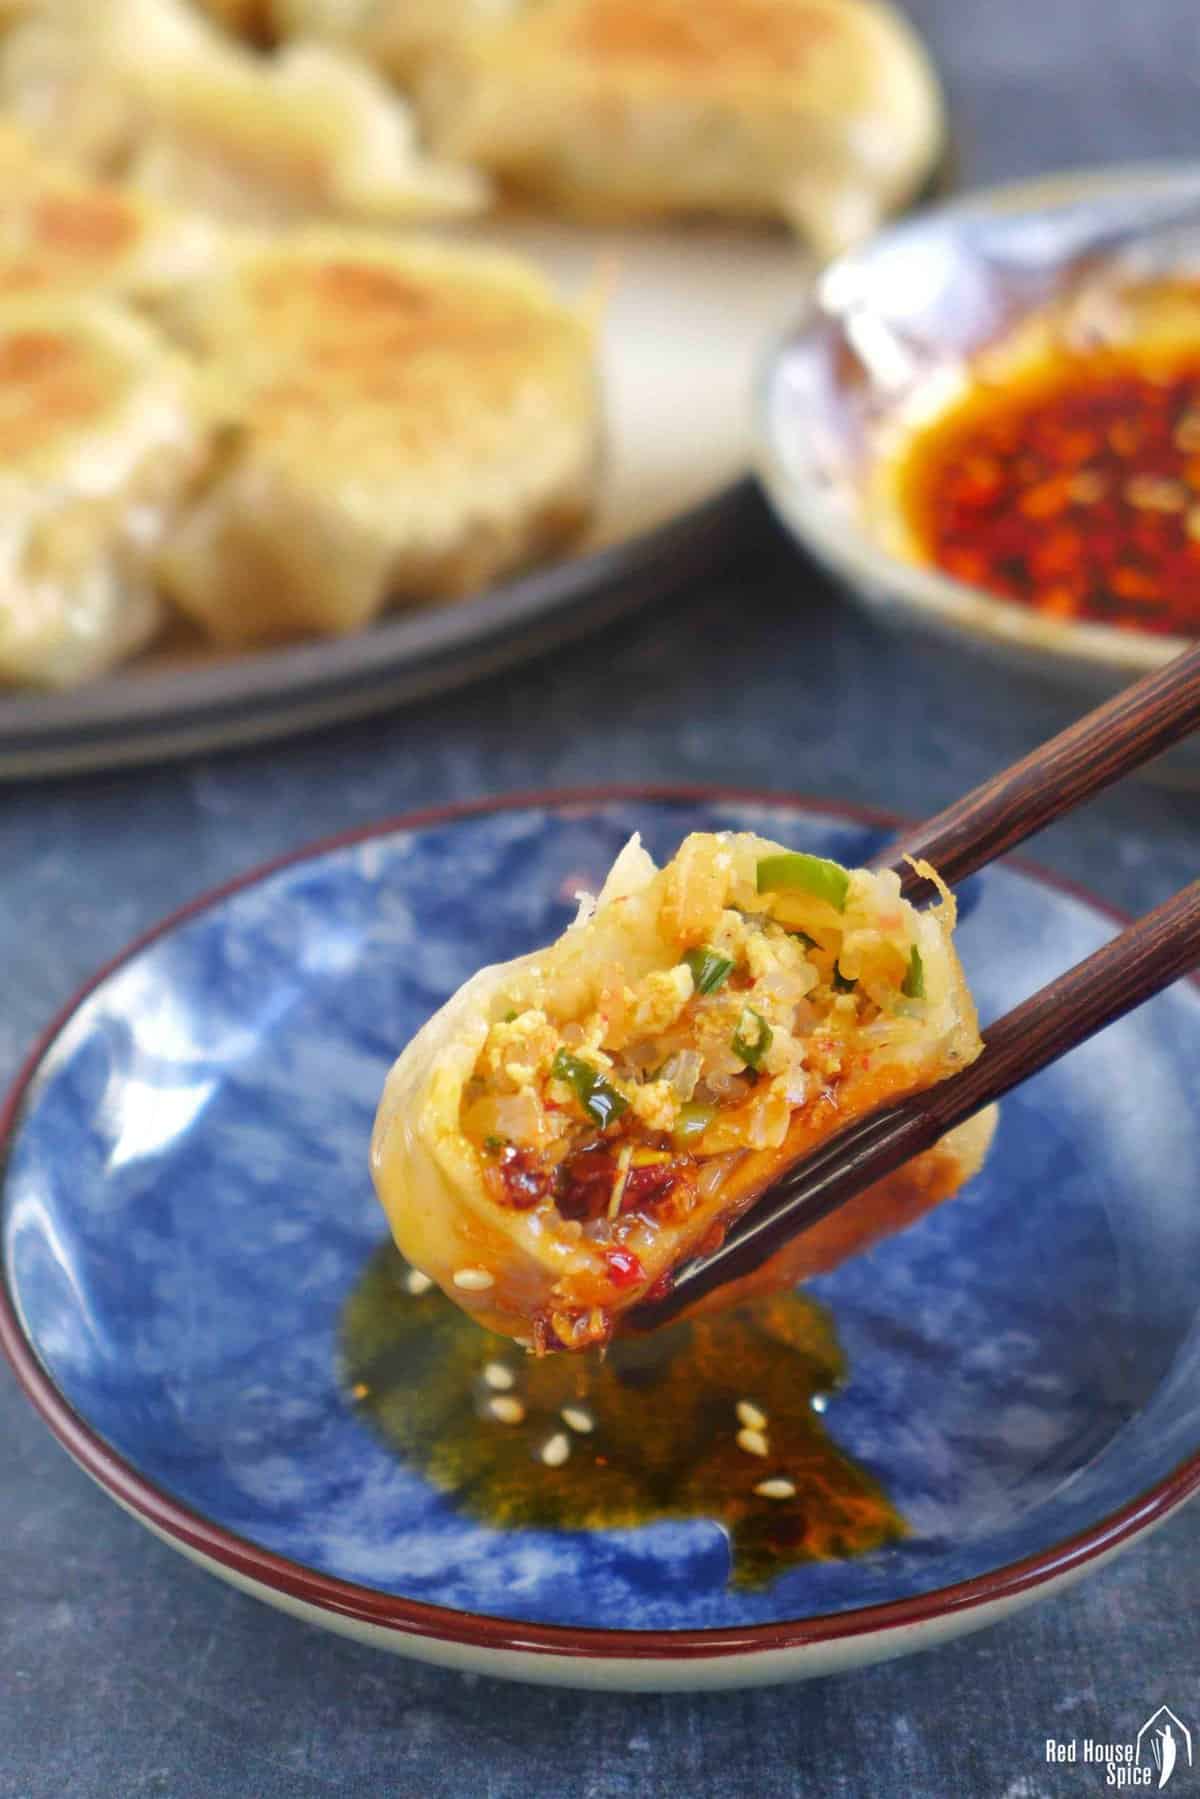 chopsticks holding a dumpling showing its kimchi filling.